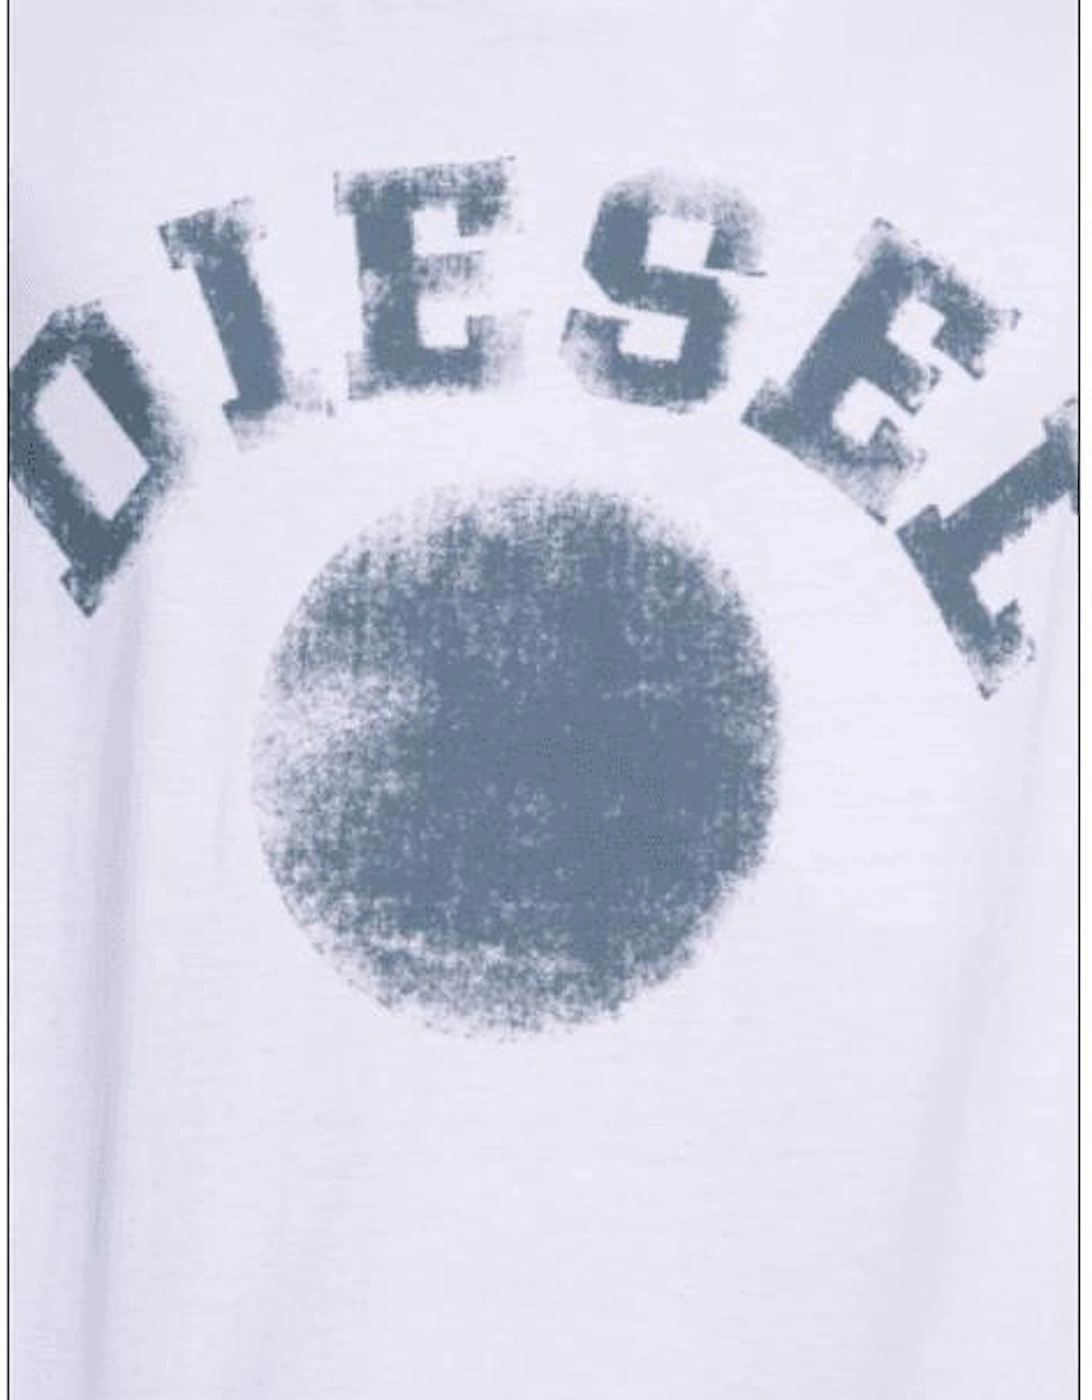 T-Diegor Chalk Logo Cotton White T-Shirt